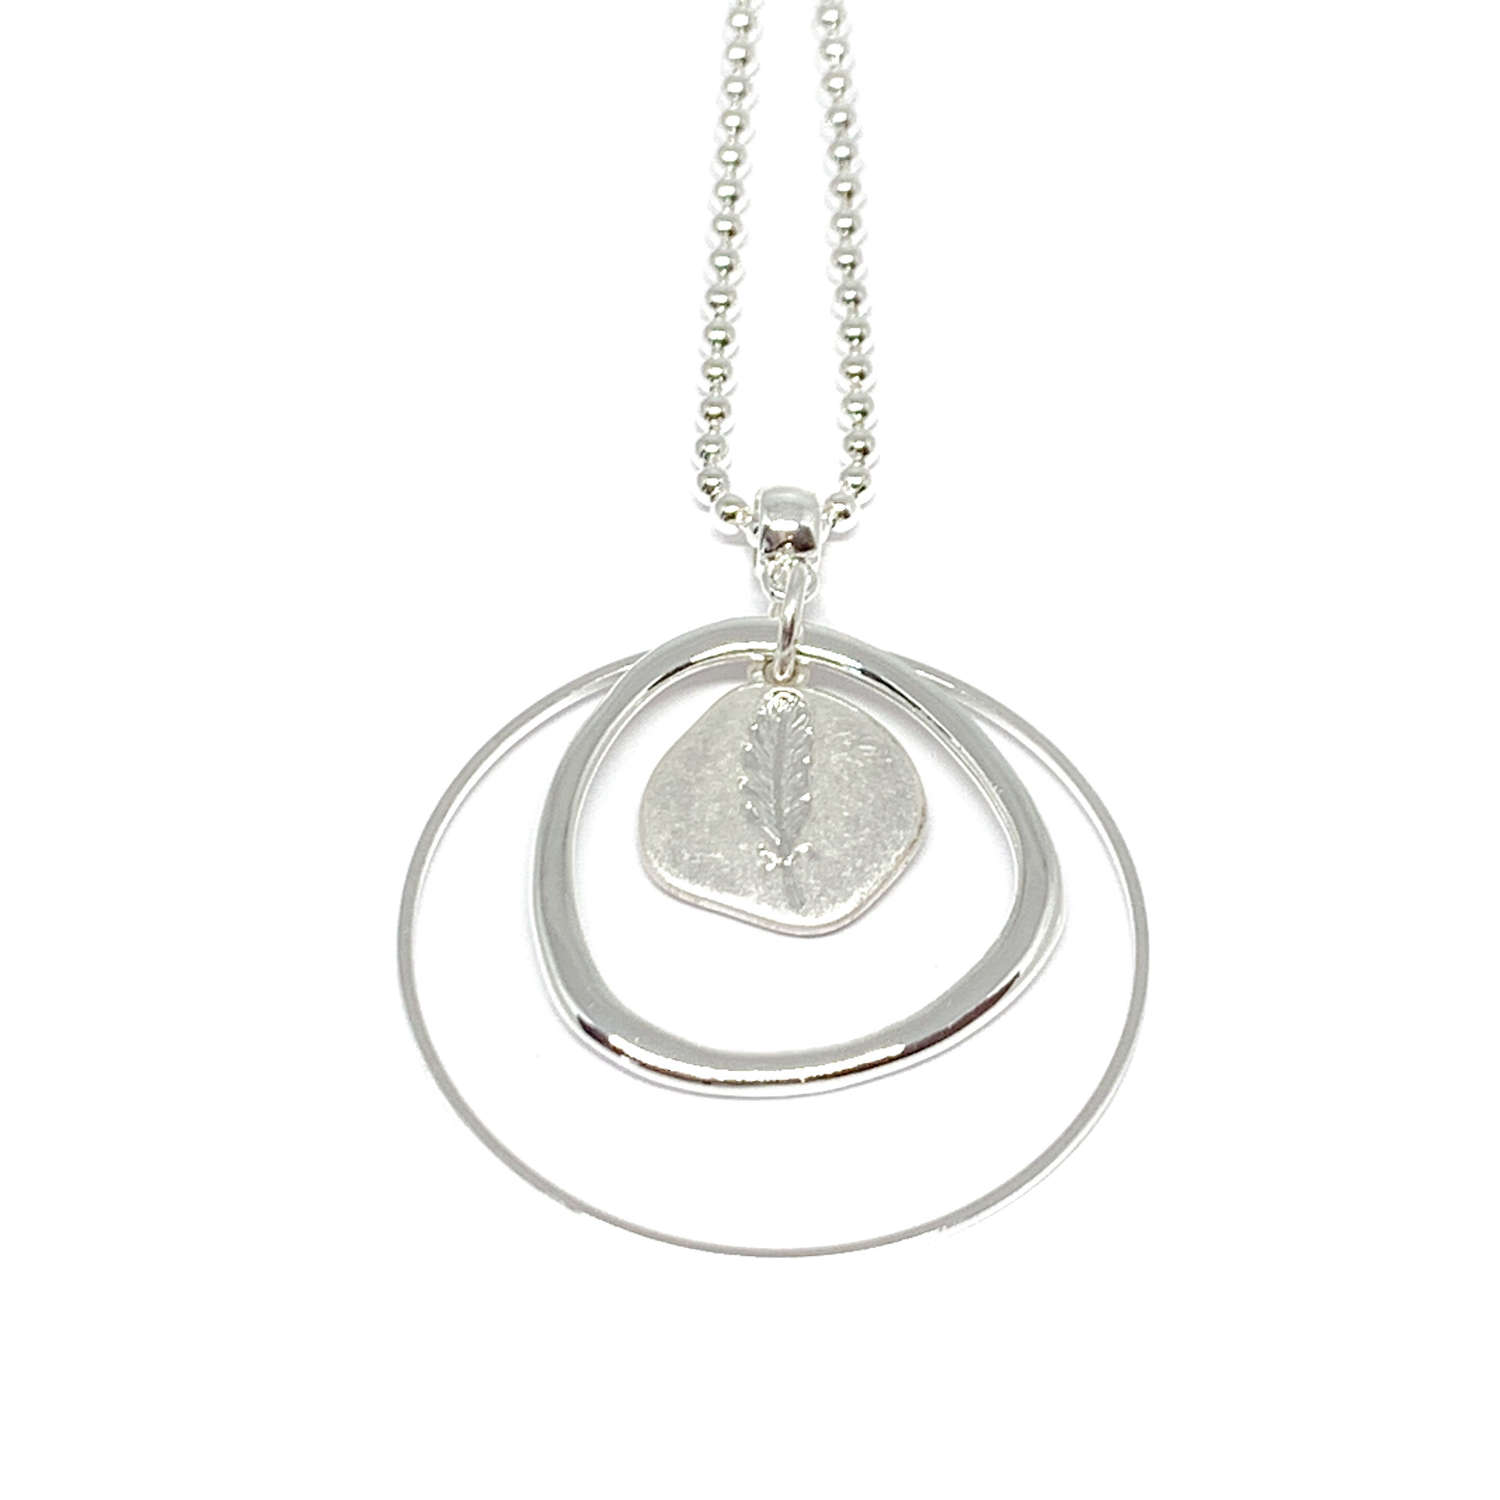 Petra Leaf Necklace - Silver